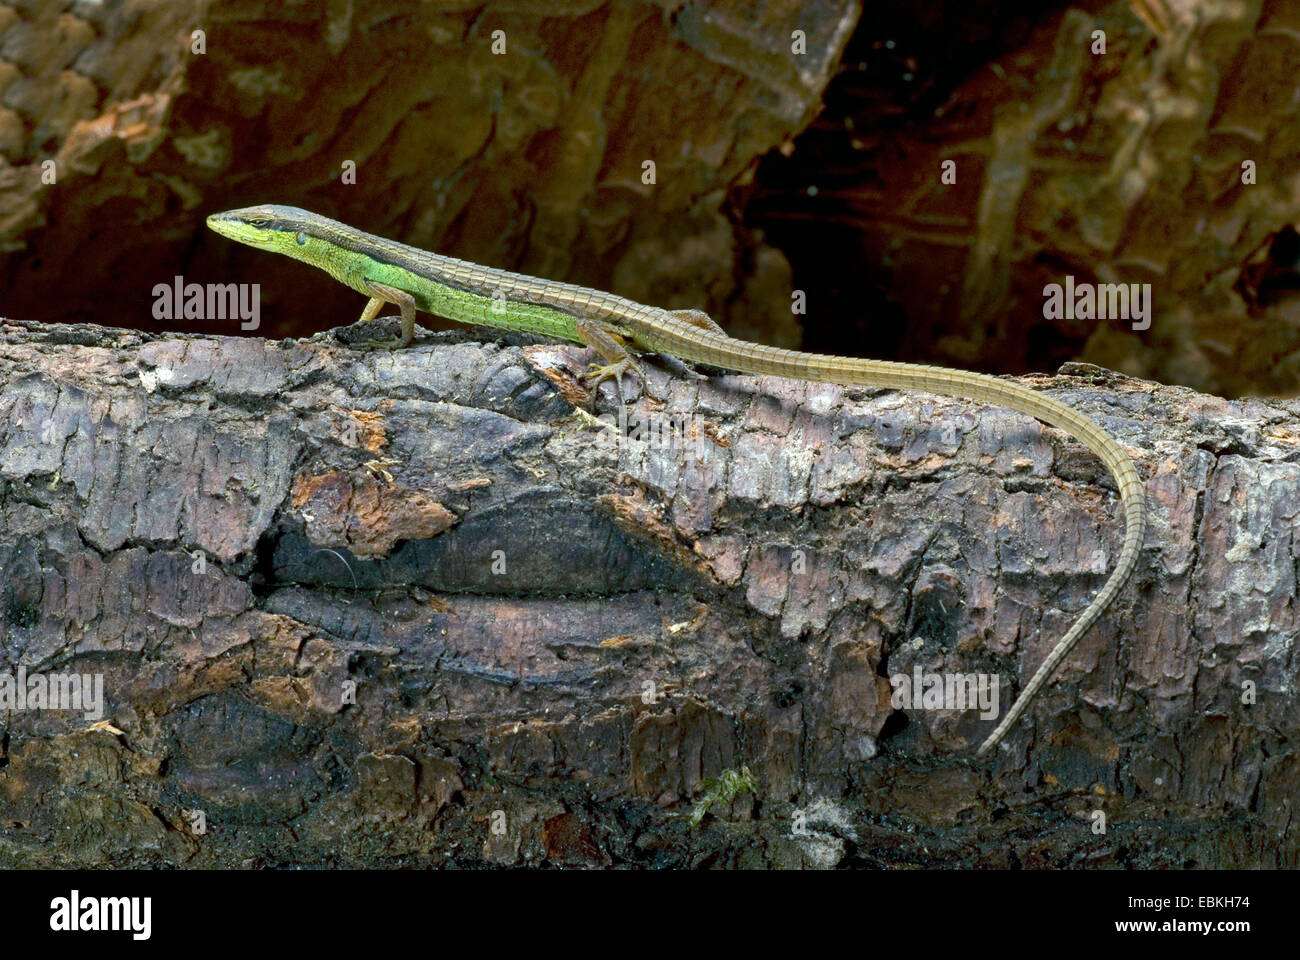 Asian grass lizard, Striped Grass Lizard (Takydromus sexlineatus), sitting on a stem Stock Photo